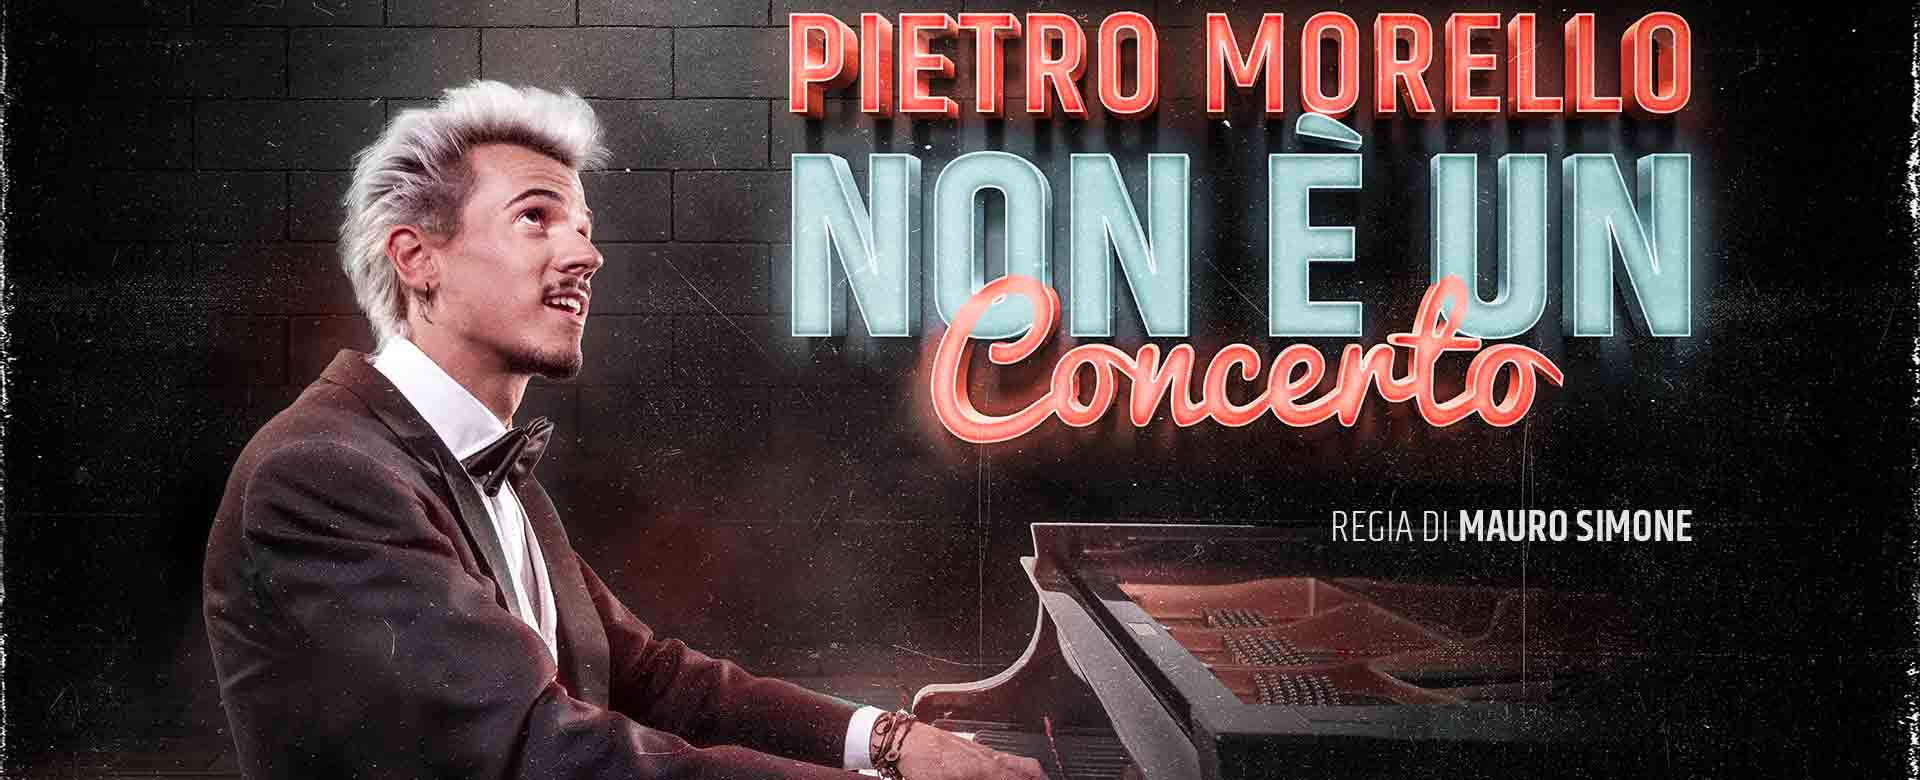 Pietro Morello